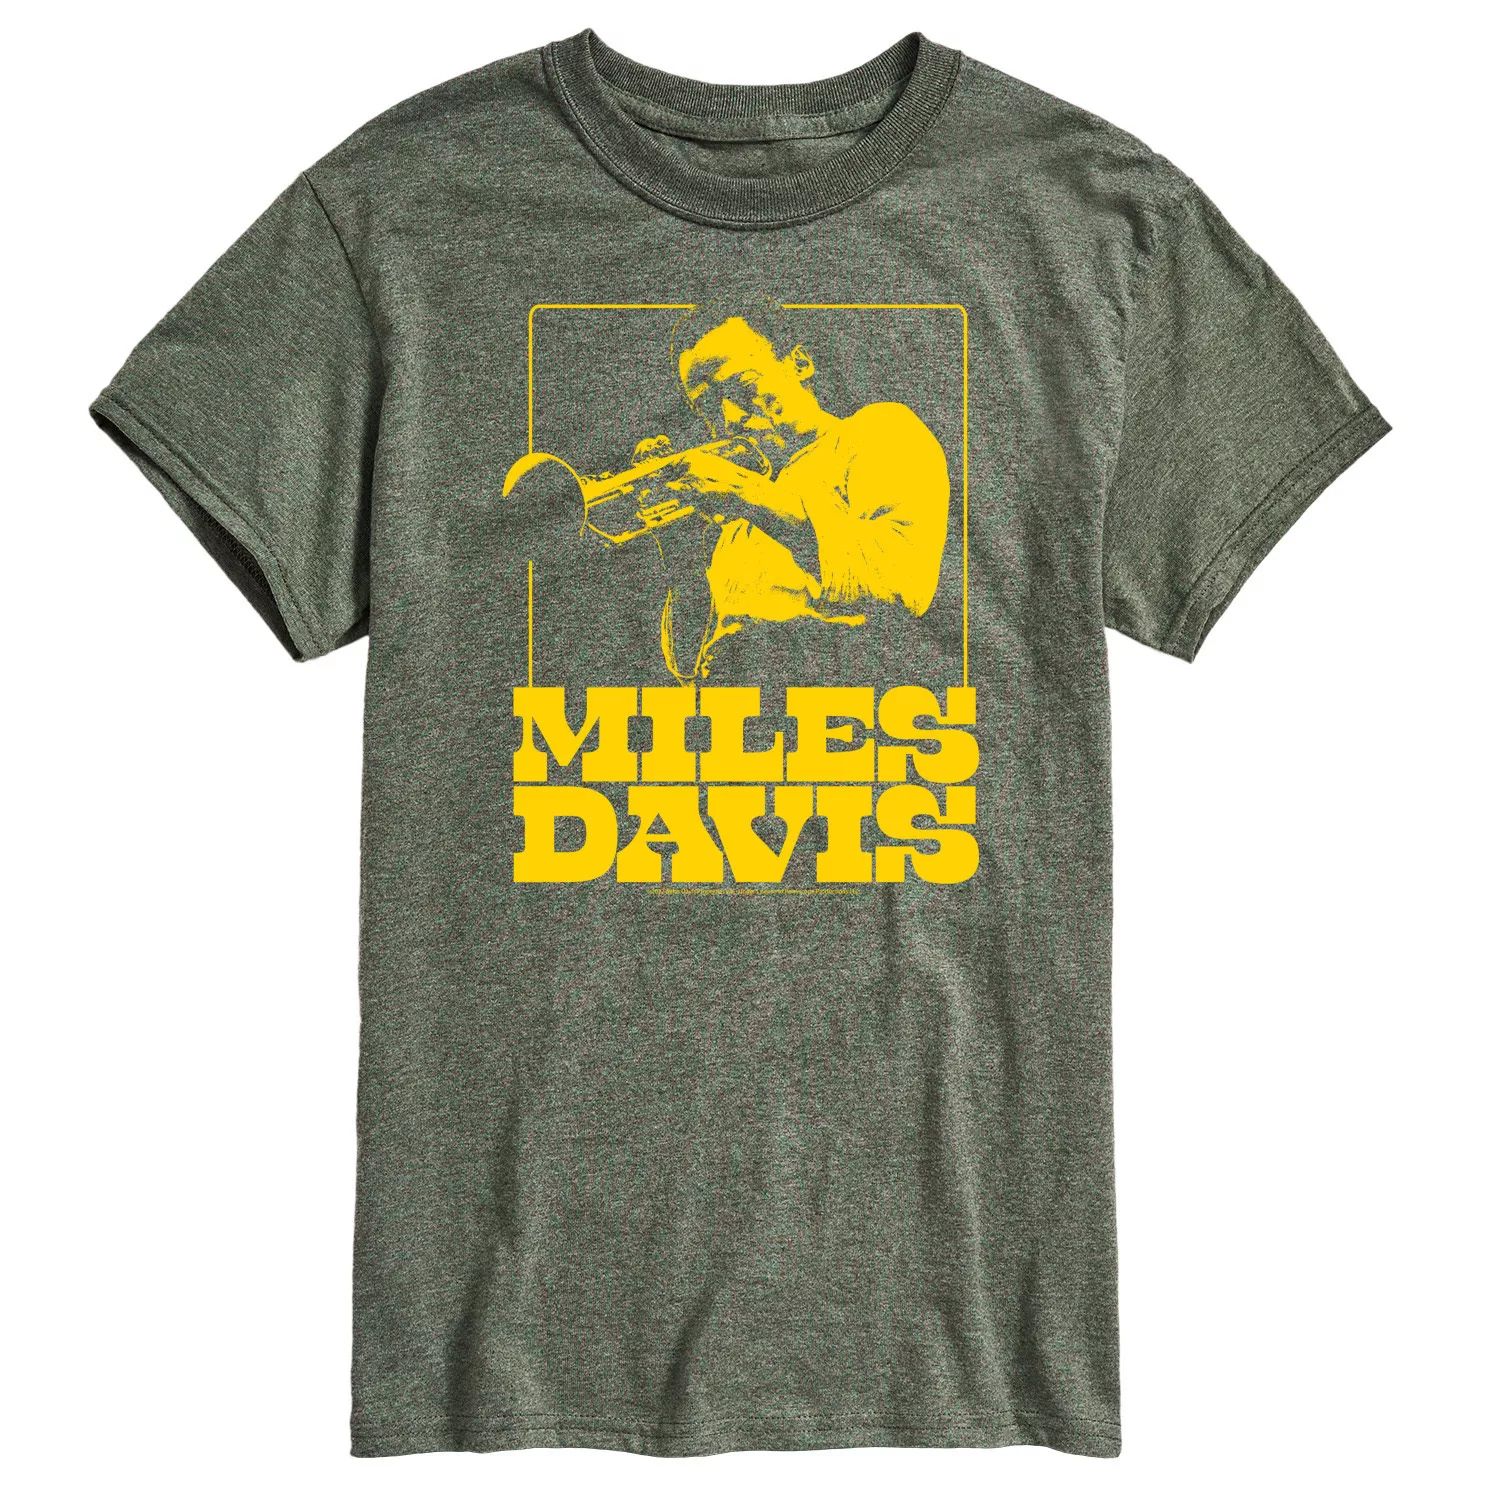 Мужская футболка Miles Davis Licensed Character мужская футболка miles davis licensed character